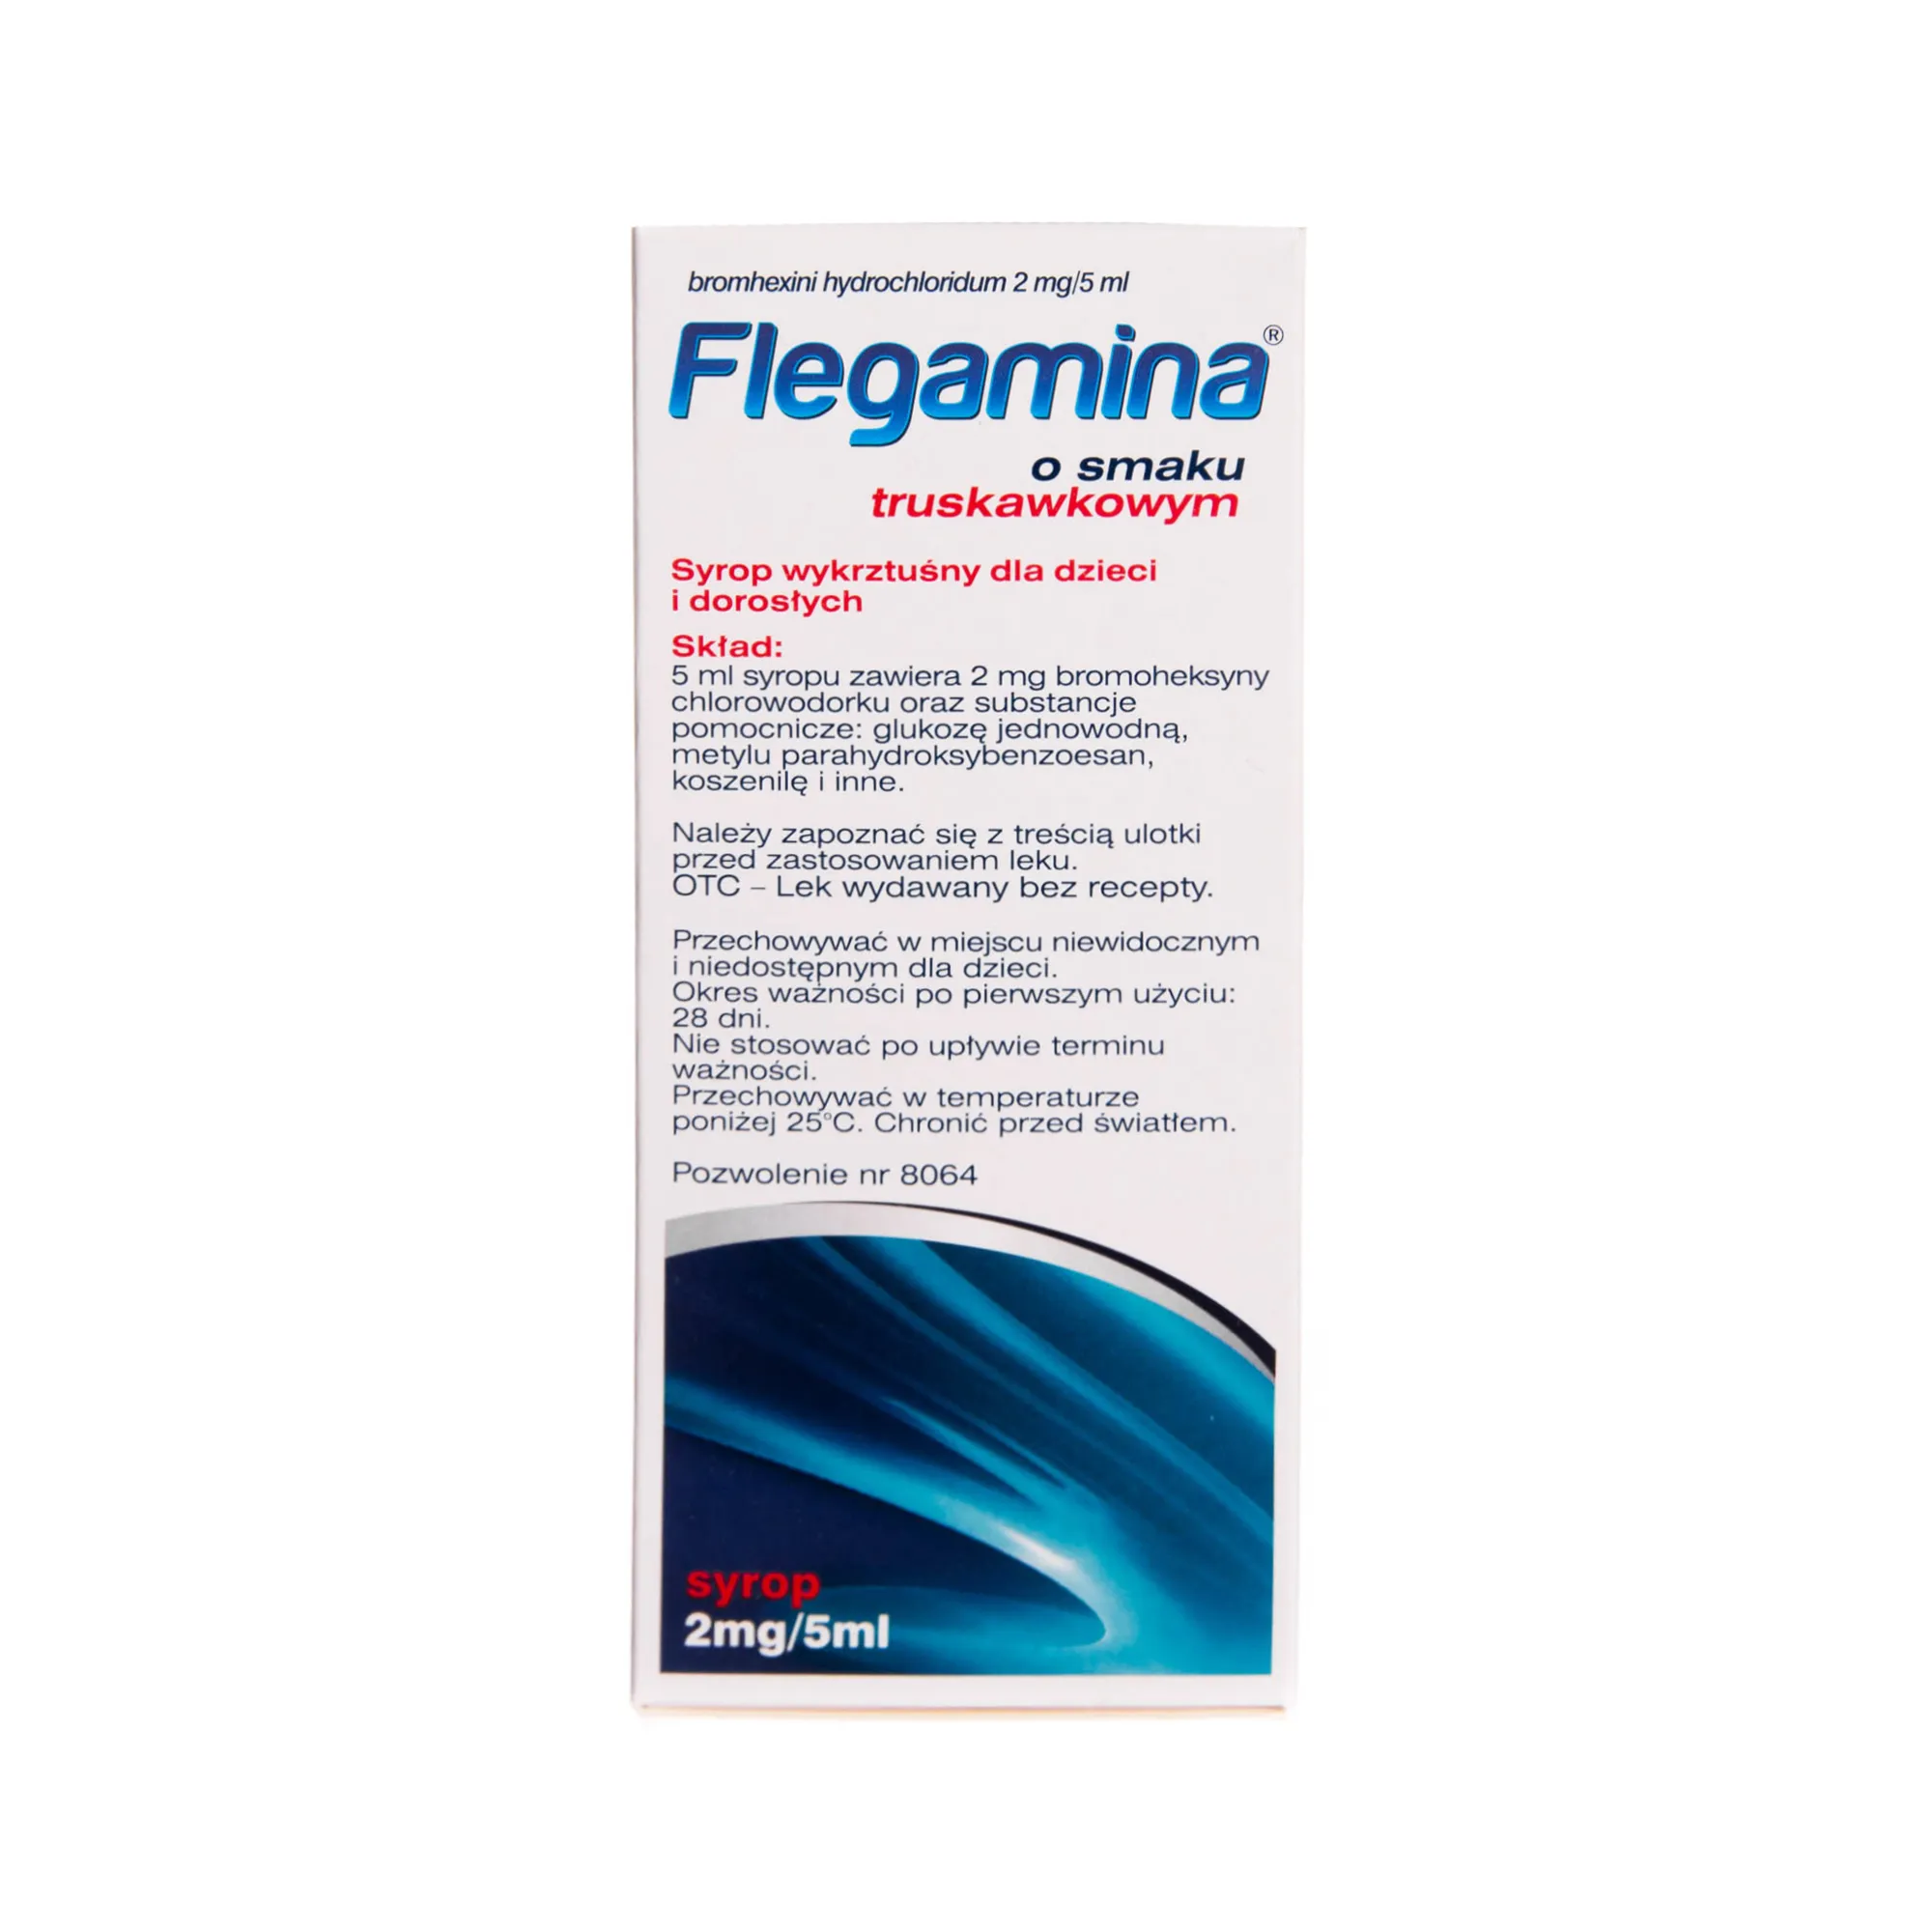 Flegamina Junior o smaku truskawkowym, bromhexini hydrochloridum 2 mg/5 ml, 200 ml 